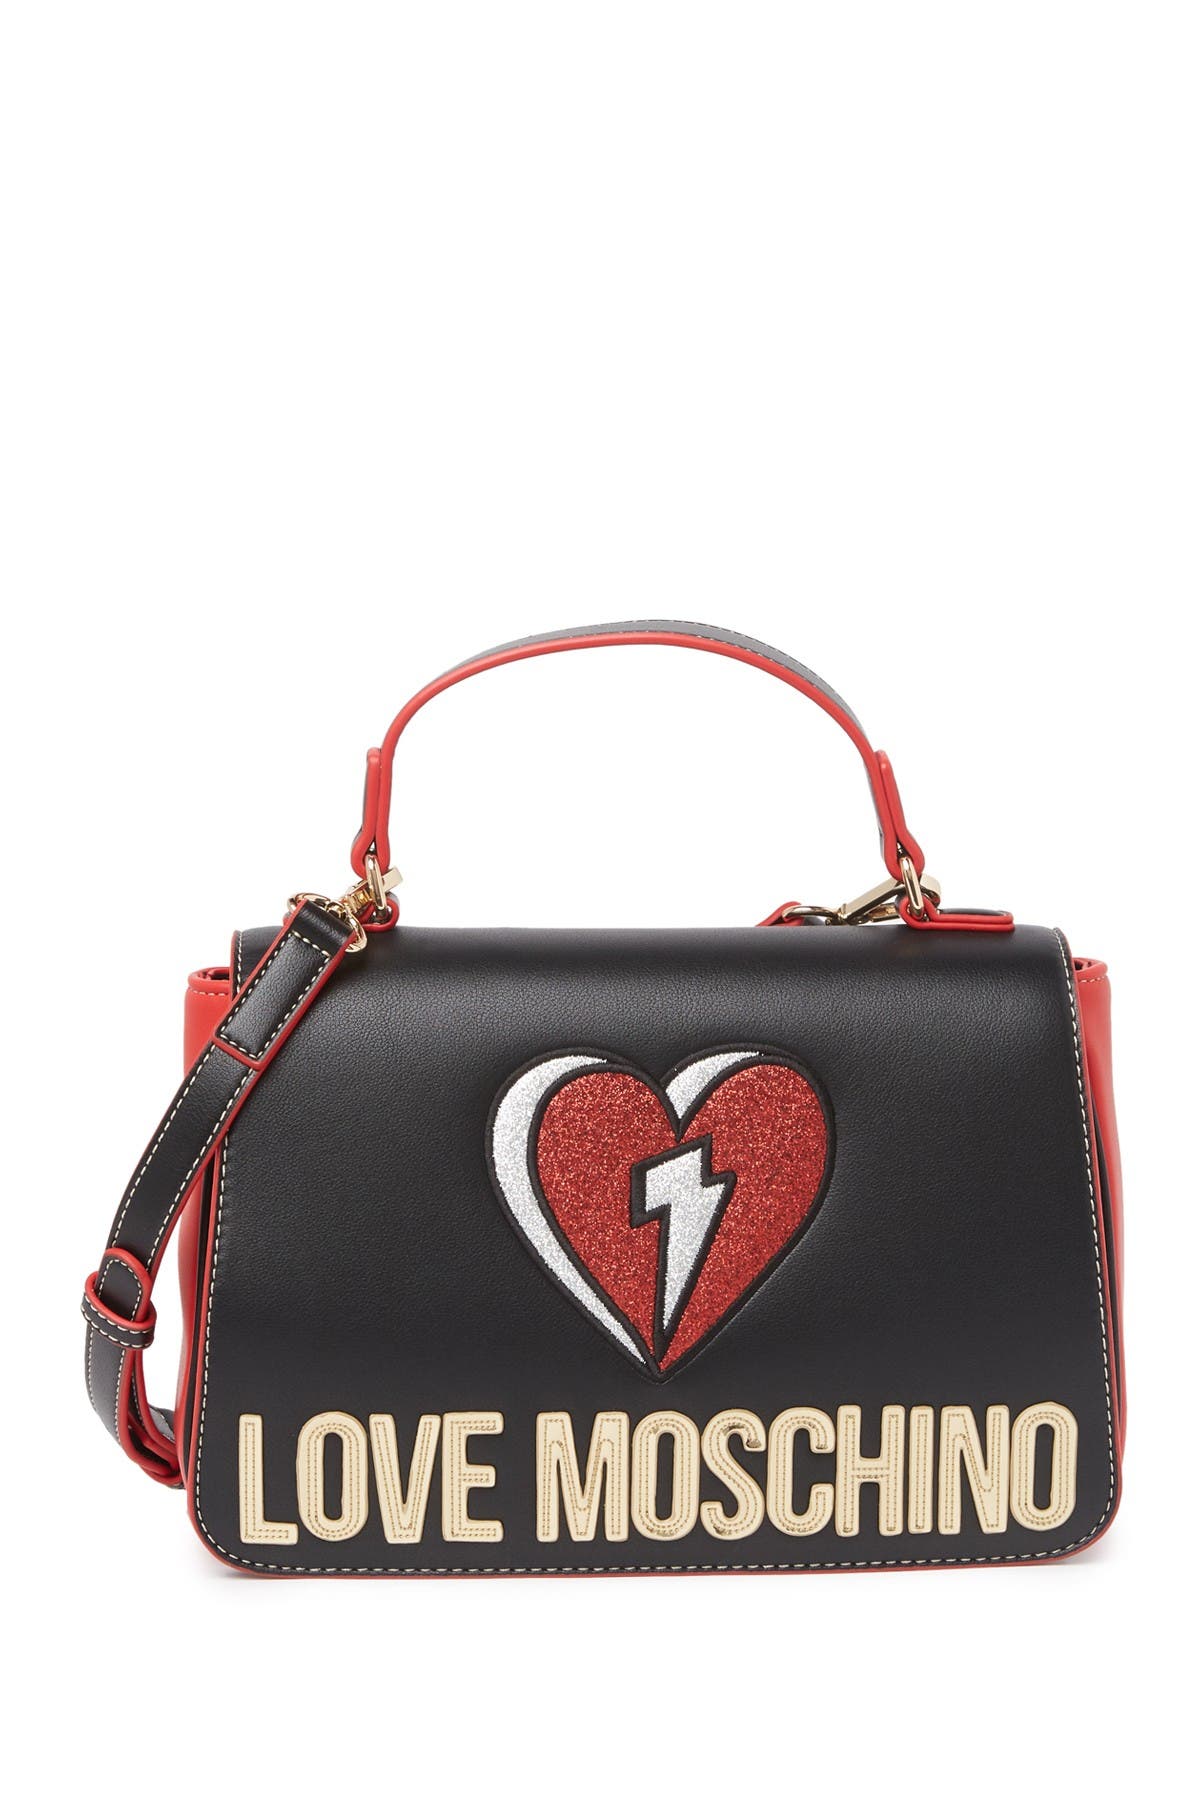 love moschino love heart bag